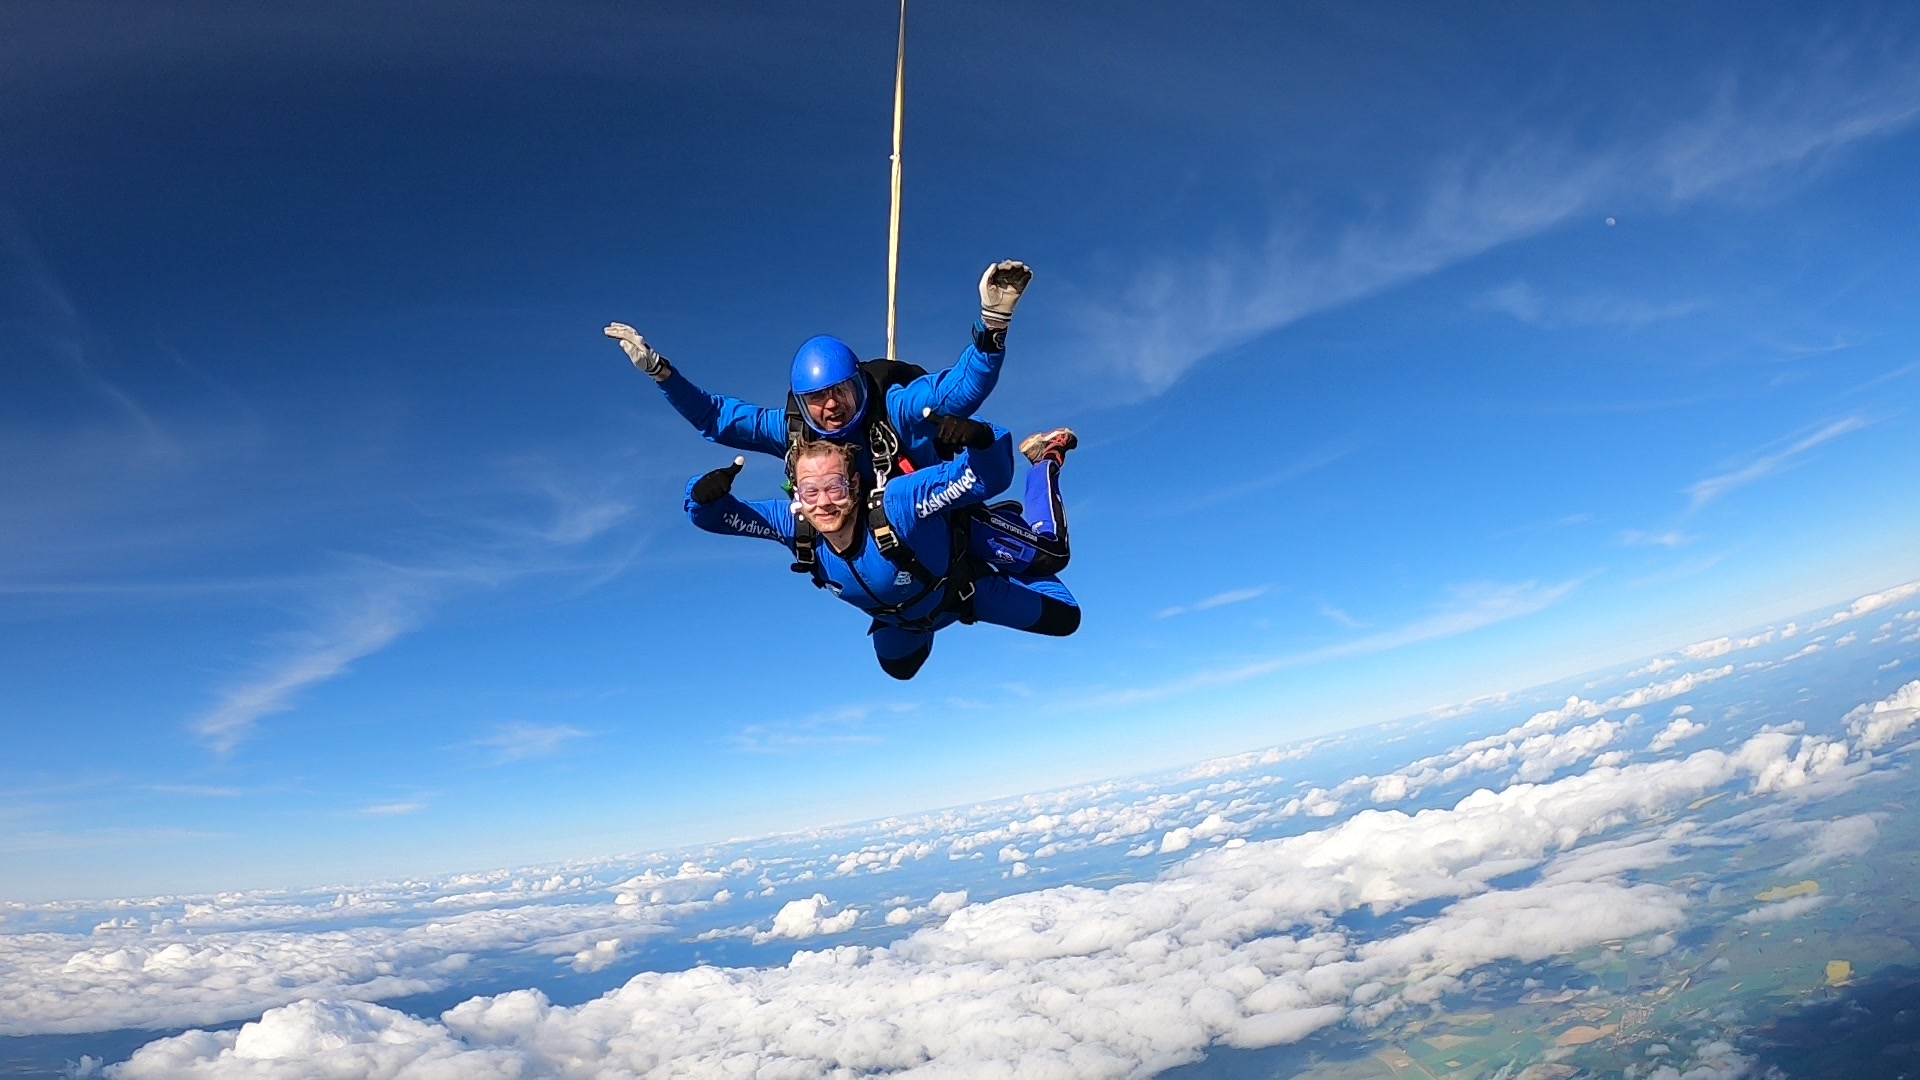 Tandem skydive customer in freefall smiling at camera